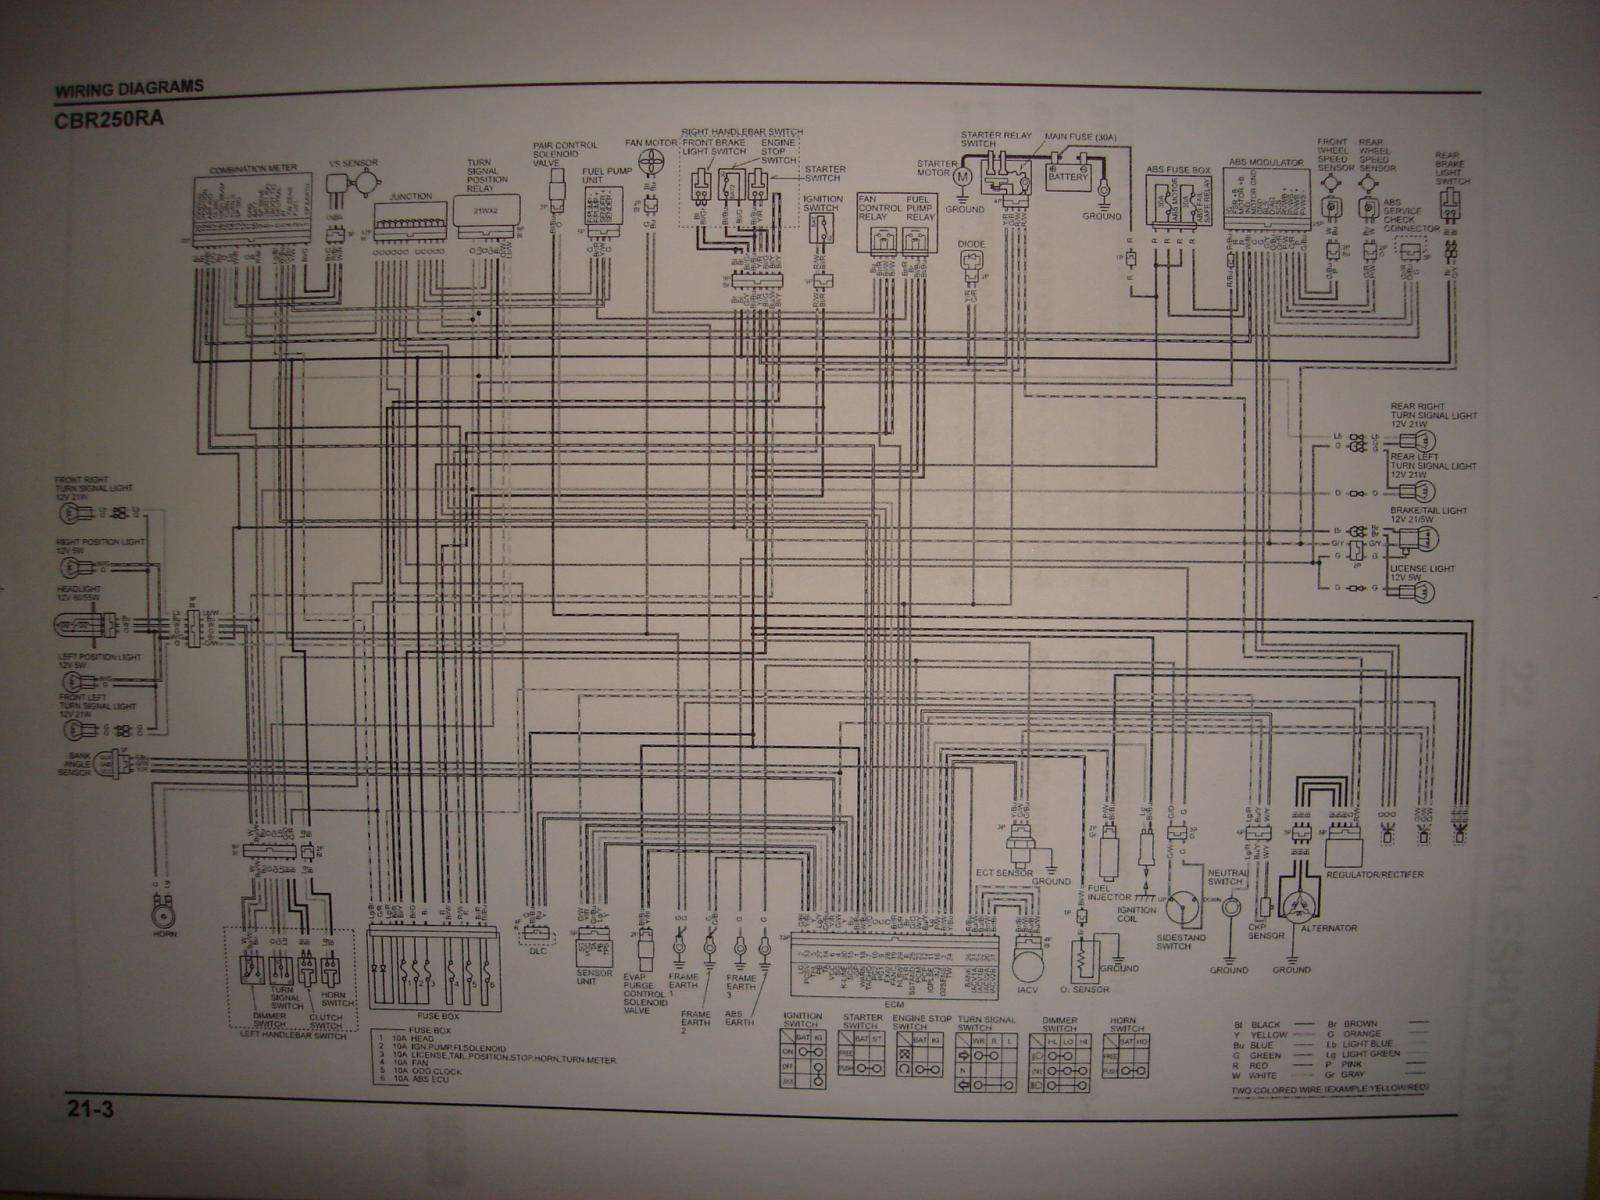 Wiring Diagram Request --- 2012 Cbr 250ra